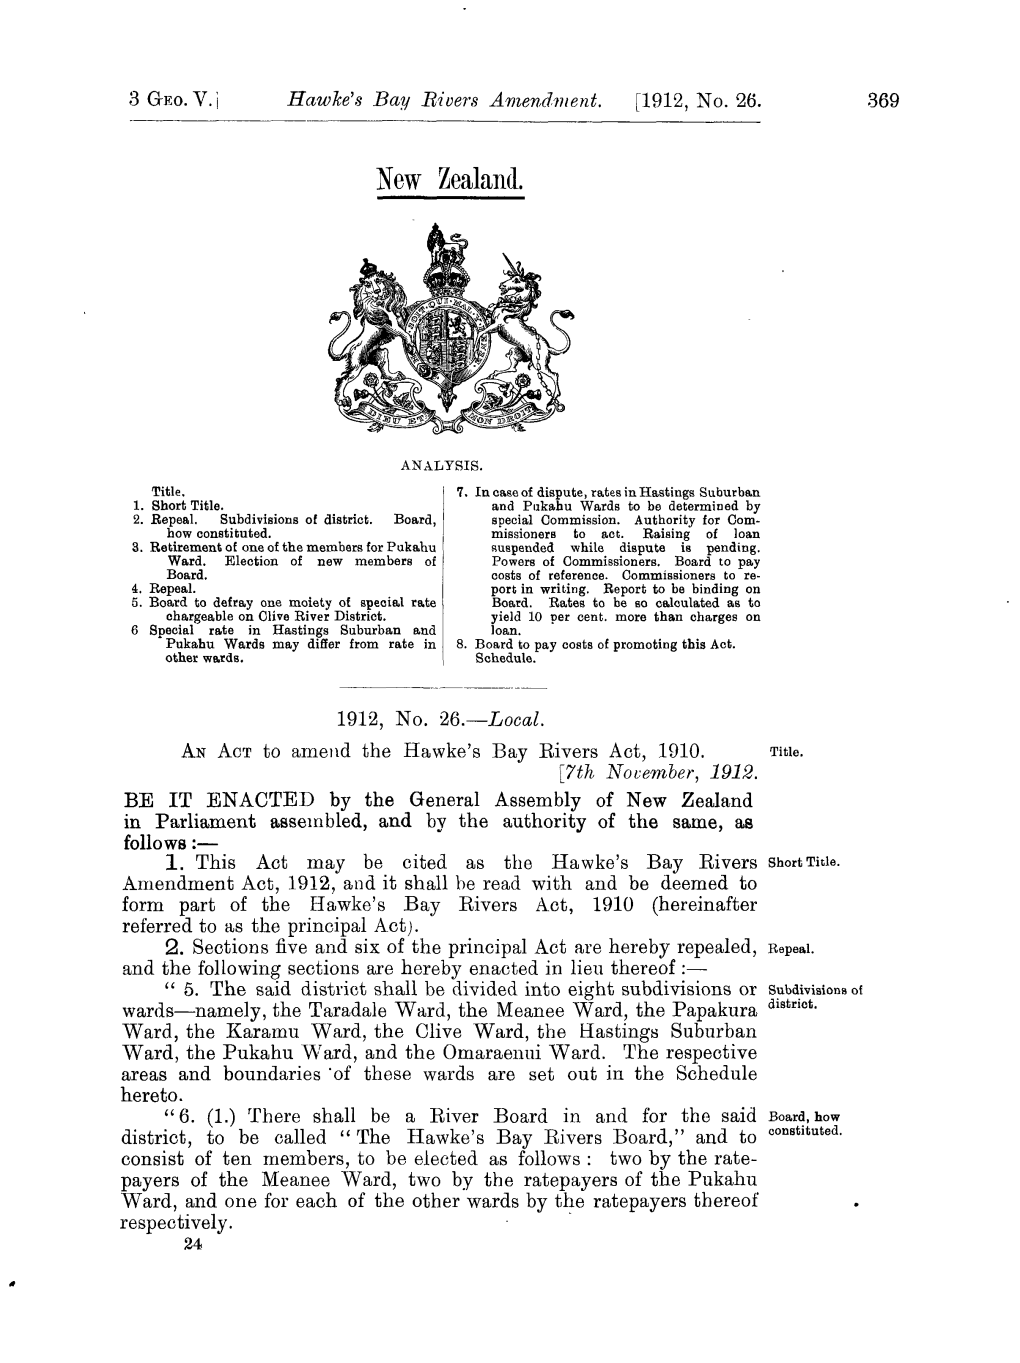 3 GEO V 1912 No 26 Hawke's Bay Rivers Amendment